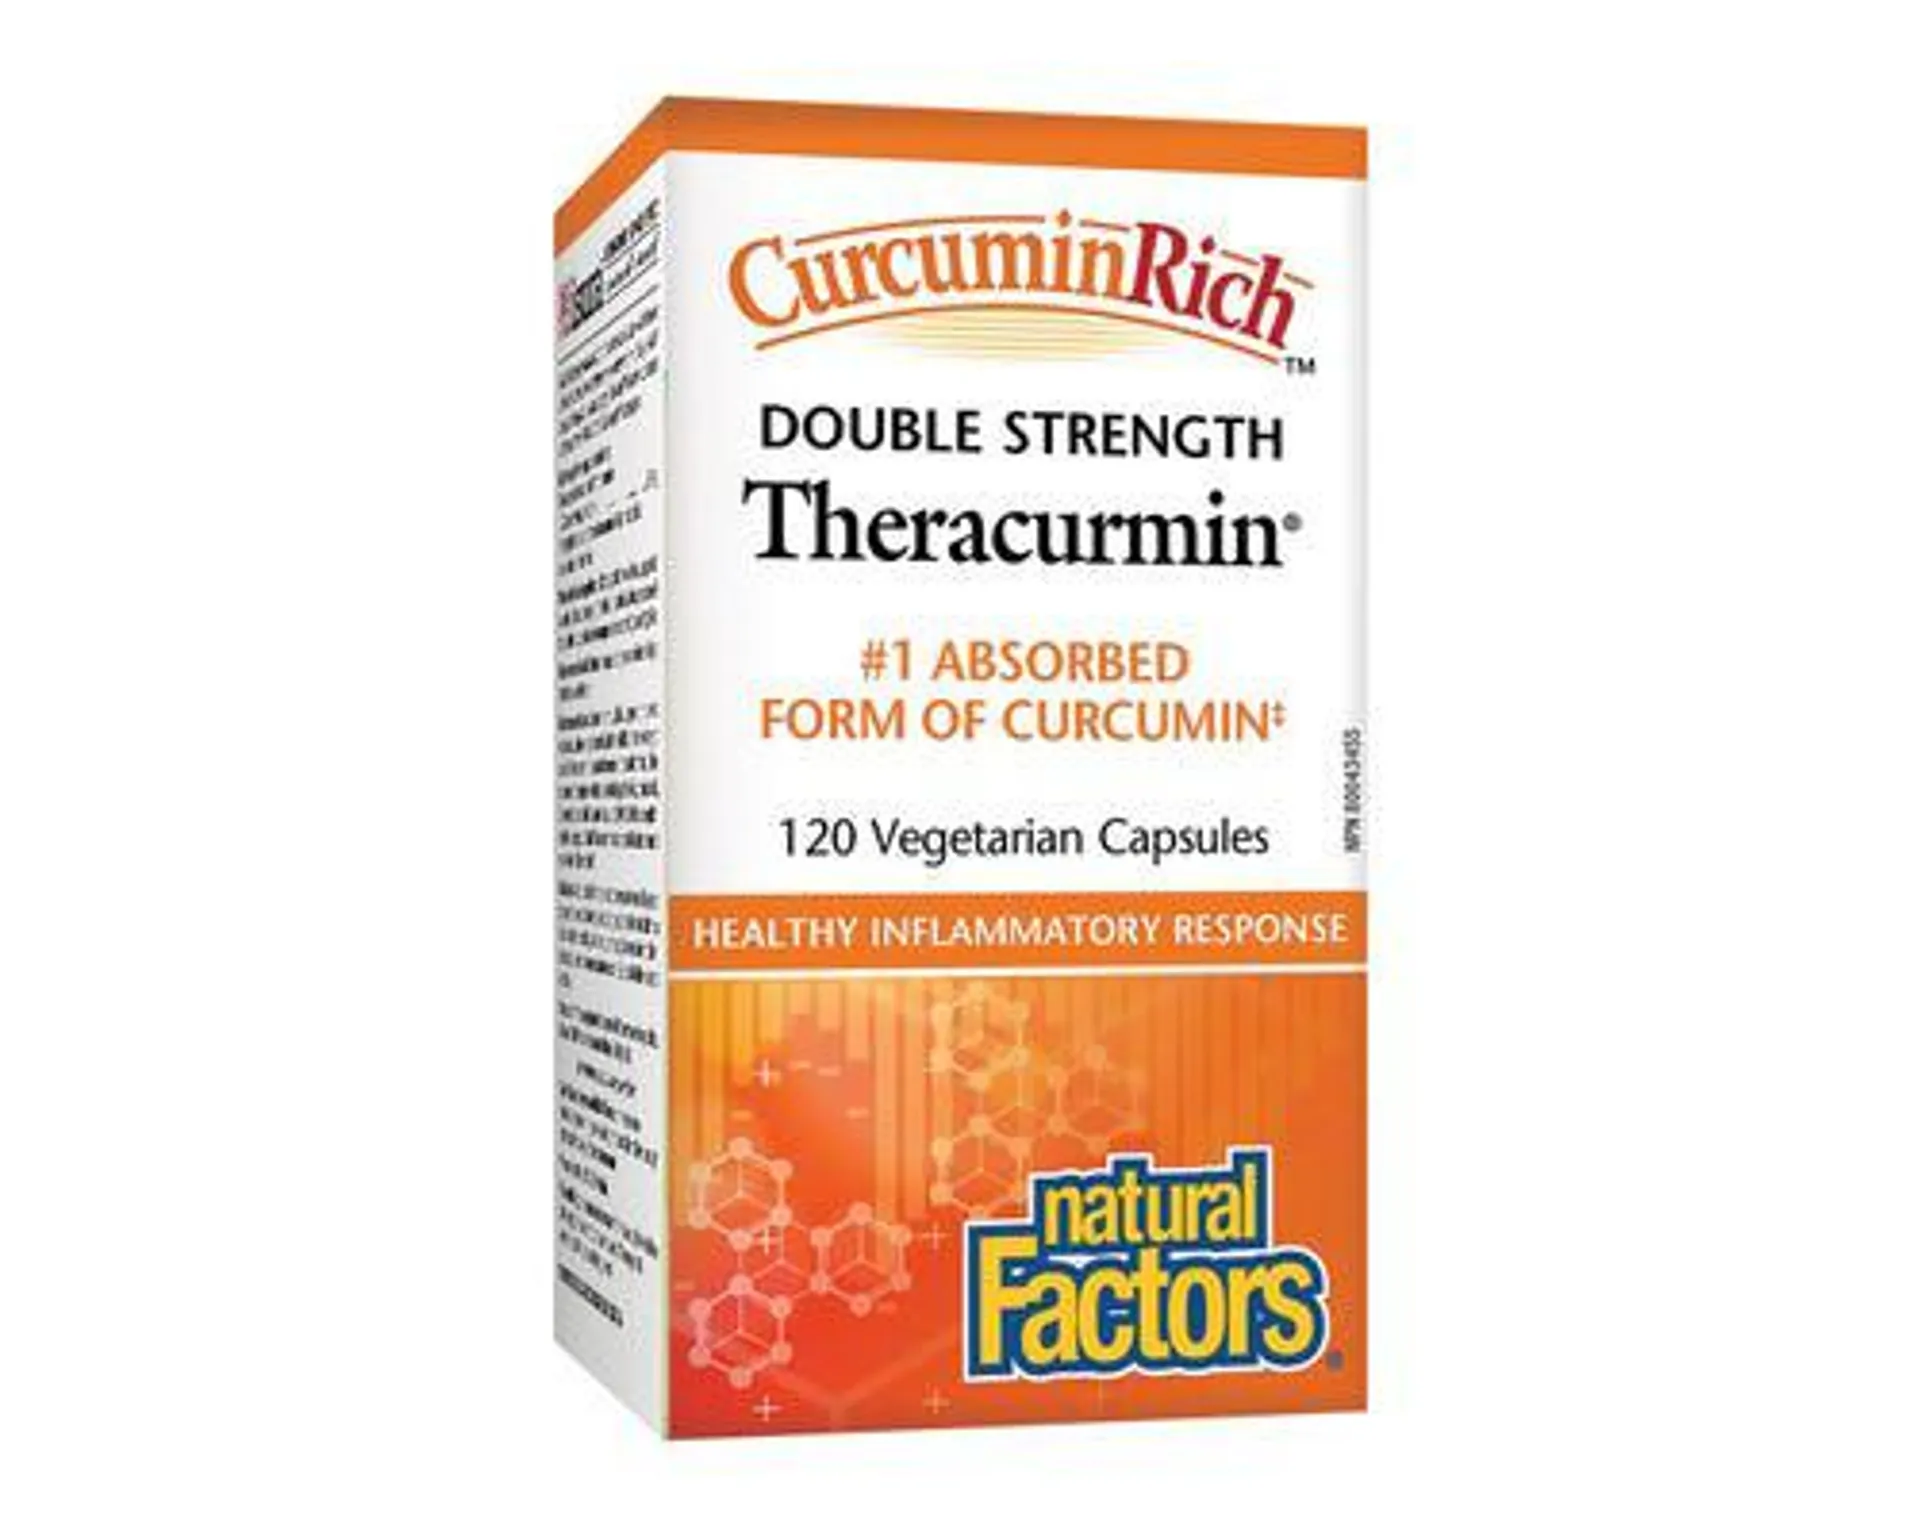 Natural Factors Curcumin Rich Theracurmin Double Strength 120 Veggie Caps